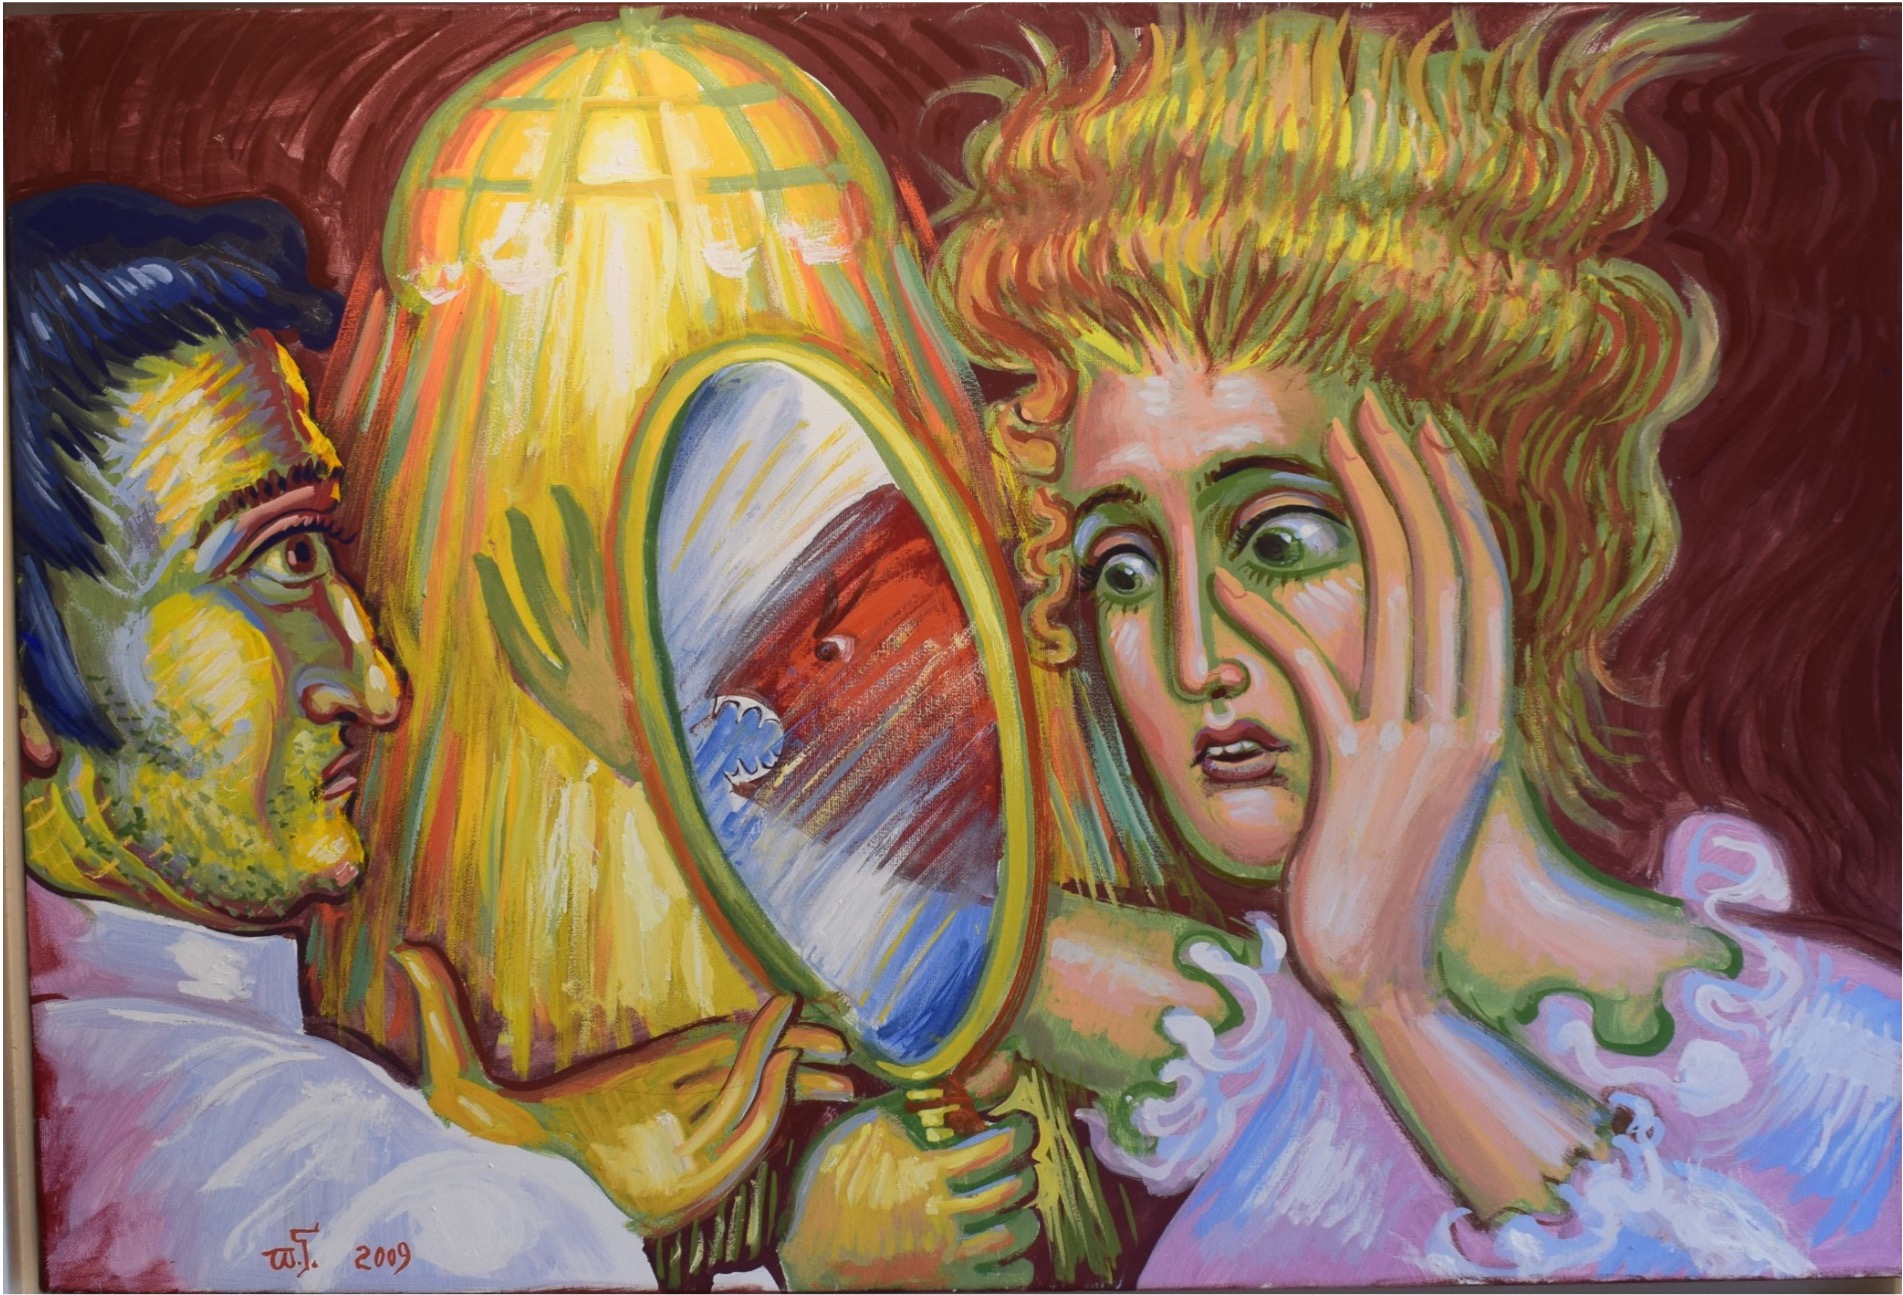 “Woman in the Mirror of a Psychotherapist”, acrylic on canvas, 2009, 70x60 Π139 - Η γυναίκα στον καθρέπτη του ψυχαναλυτή , 2009, ακρυλικό σε μουσαμά, 70*60